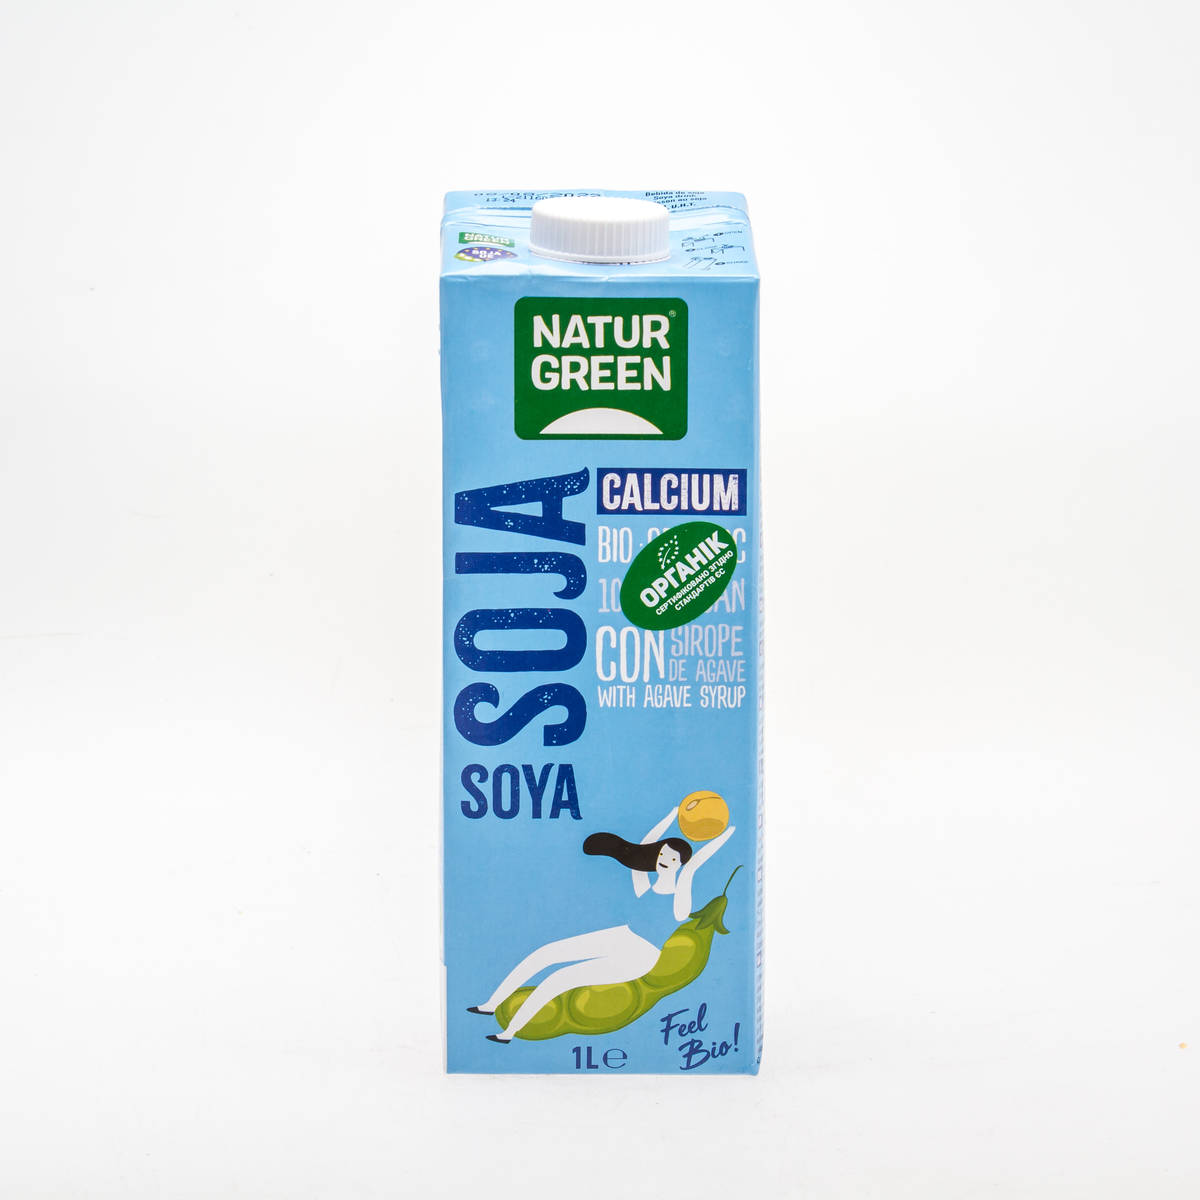 Органічне рослинне молоко з сої з кальцієм,1л - купить в интернет-магазине Юнимед